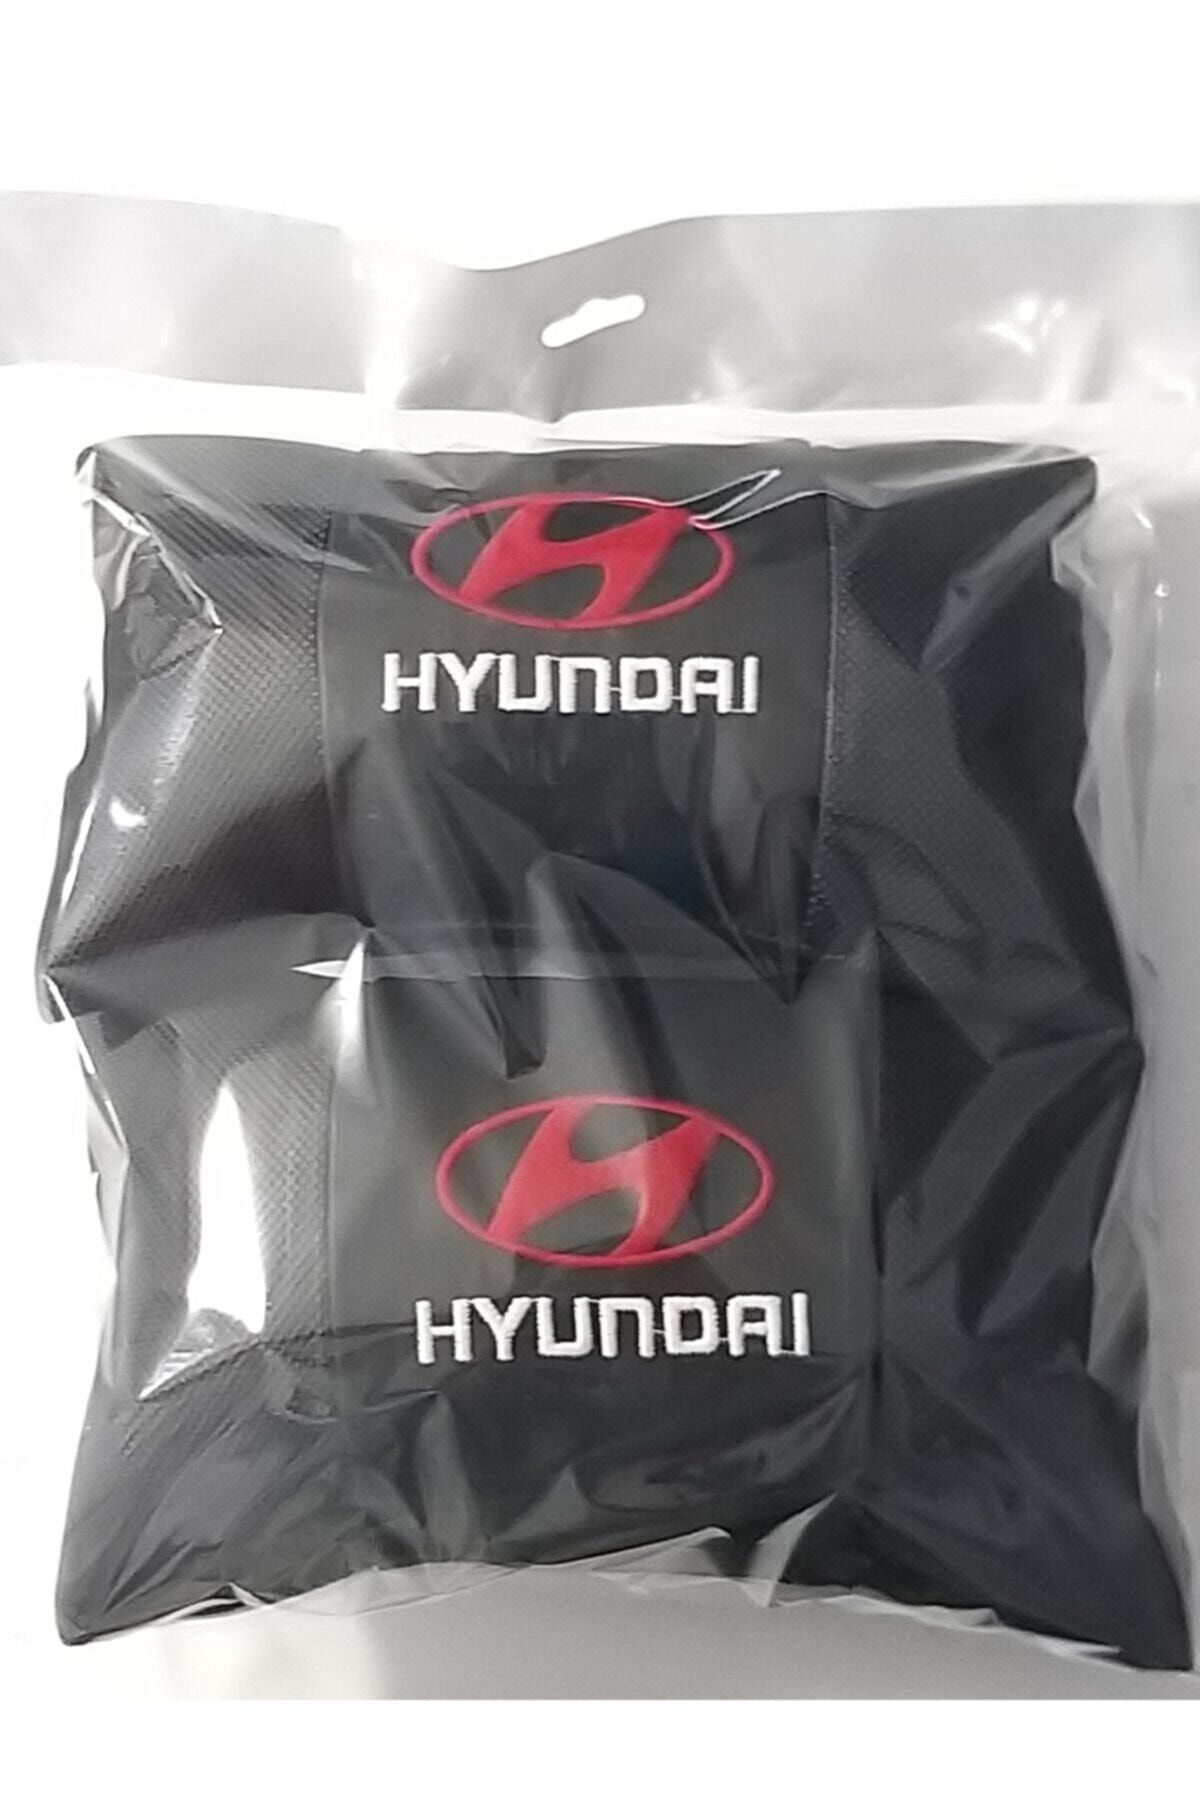 Hyundai Siyah Boyun Yastığı